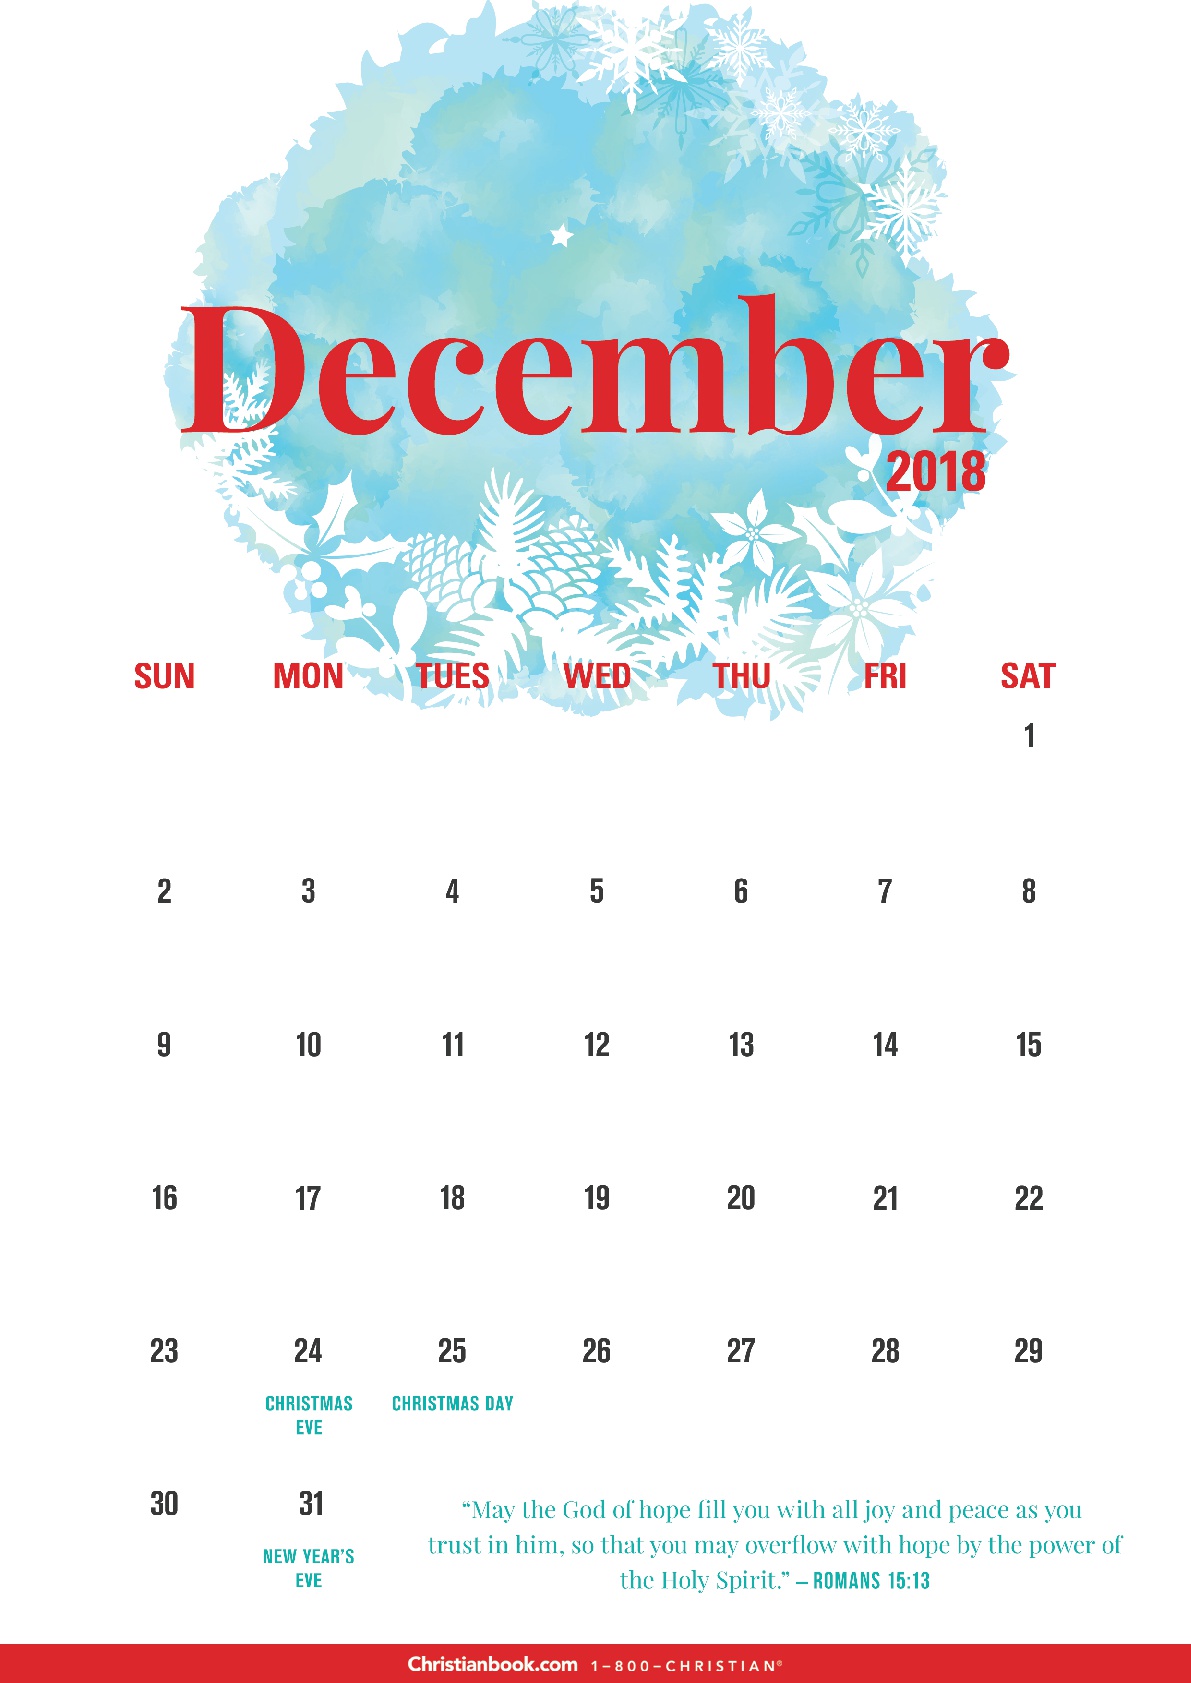 december-2018-calendar-download-christianbook-blog